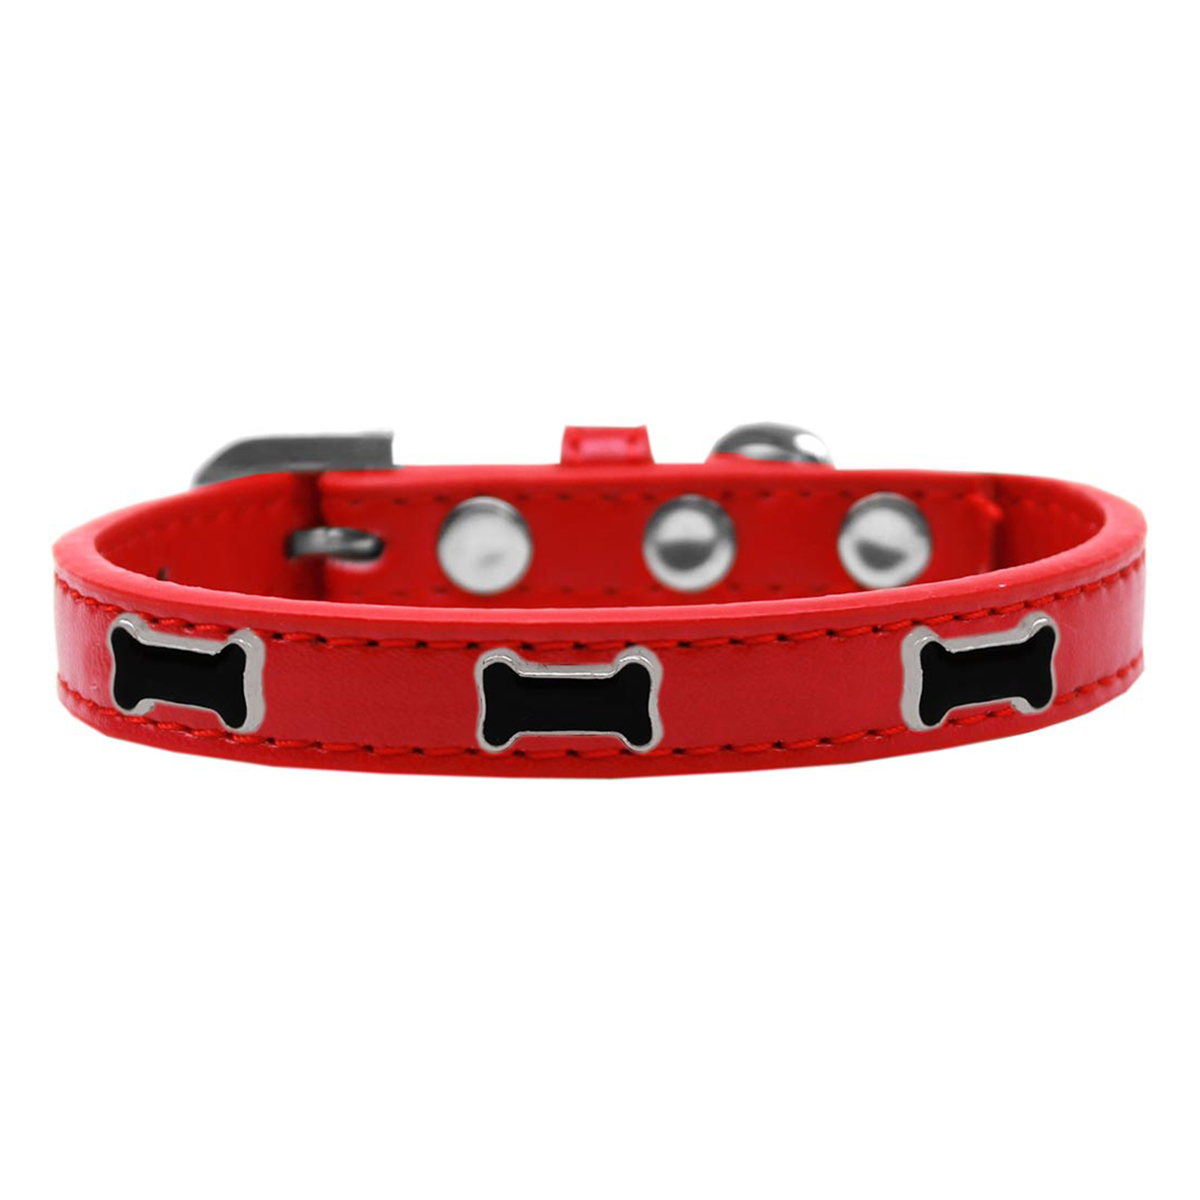 Black Bone Widget Dog Collar, Red - Size 10